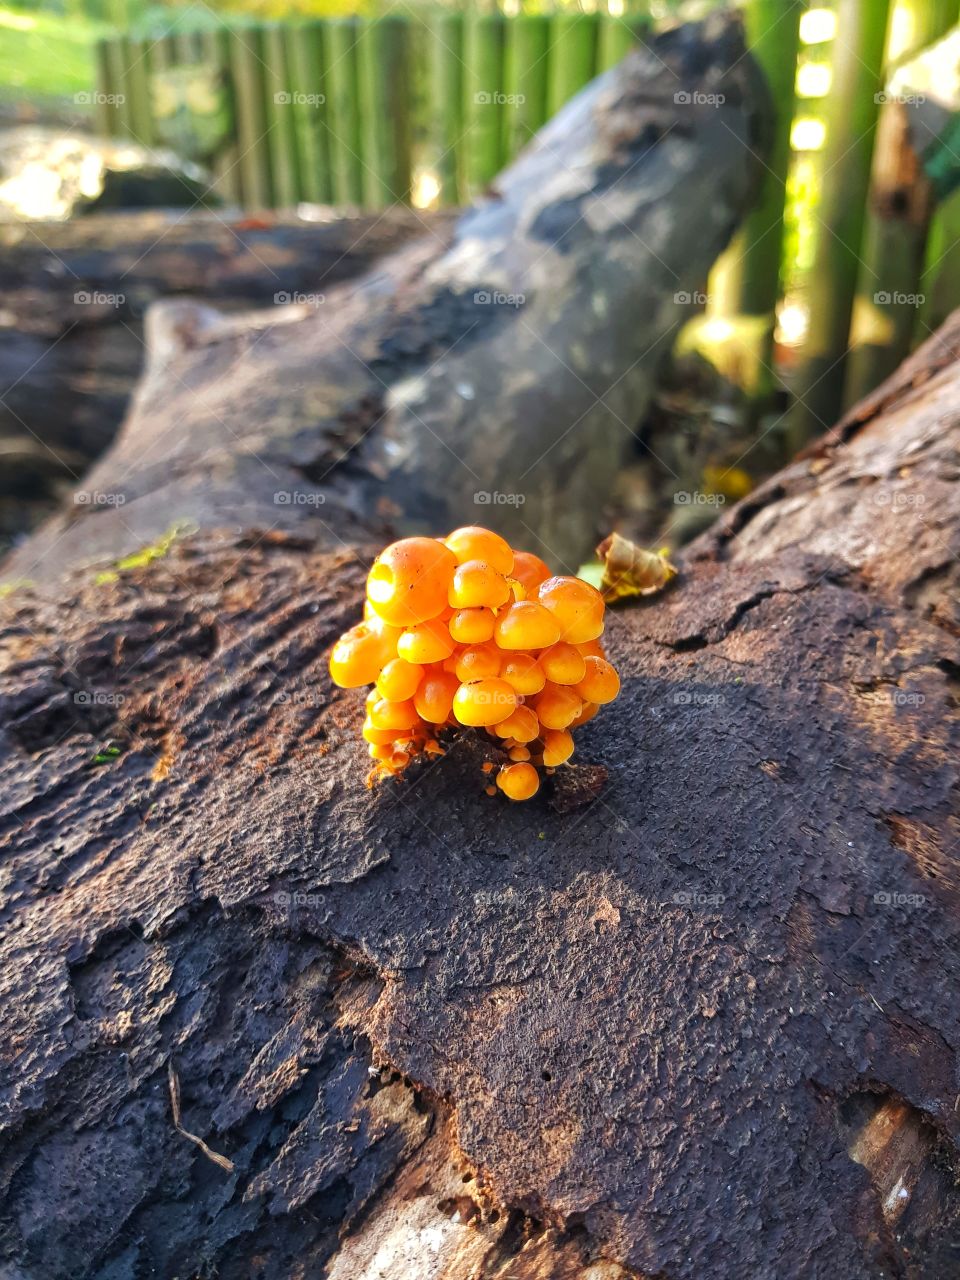 wild fungus